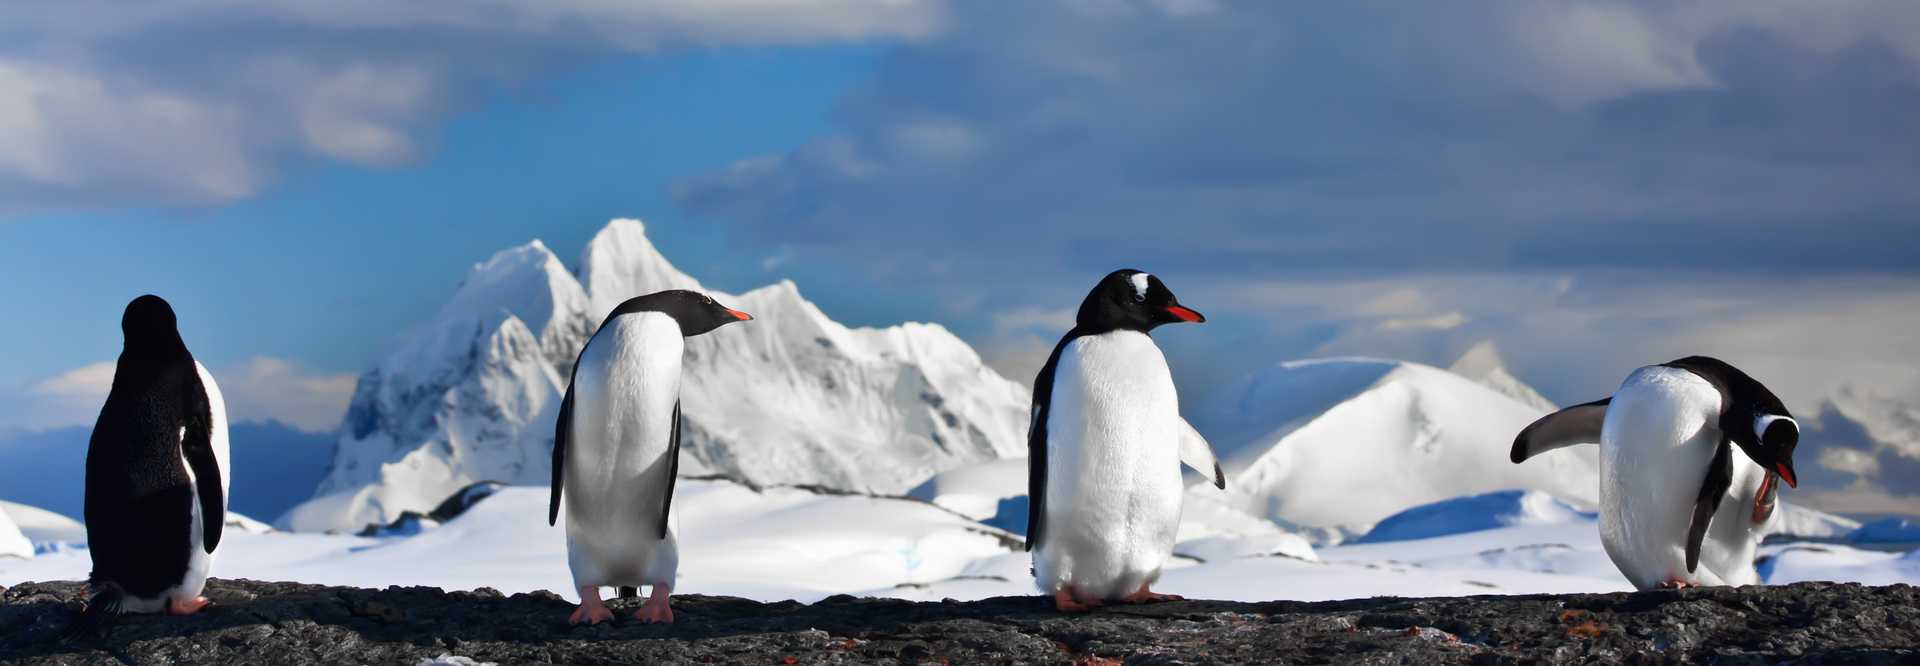 Antarctica Tour - Gentoo Penguins